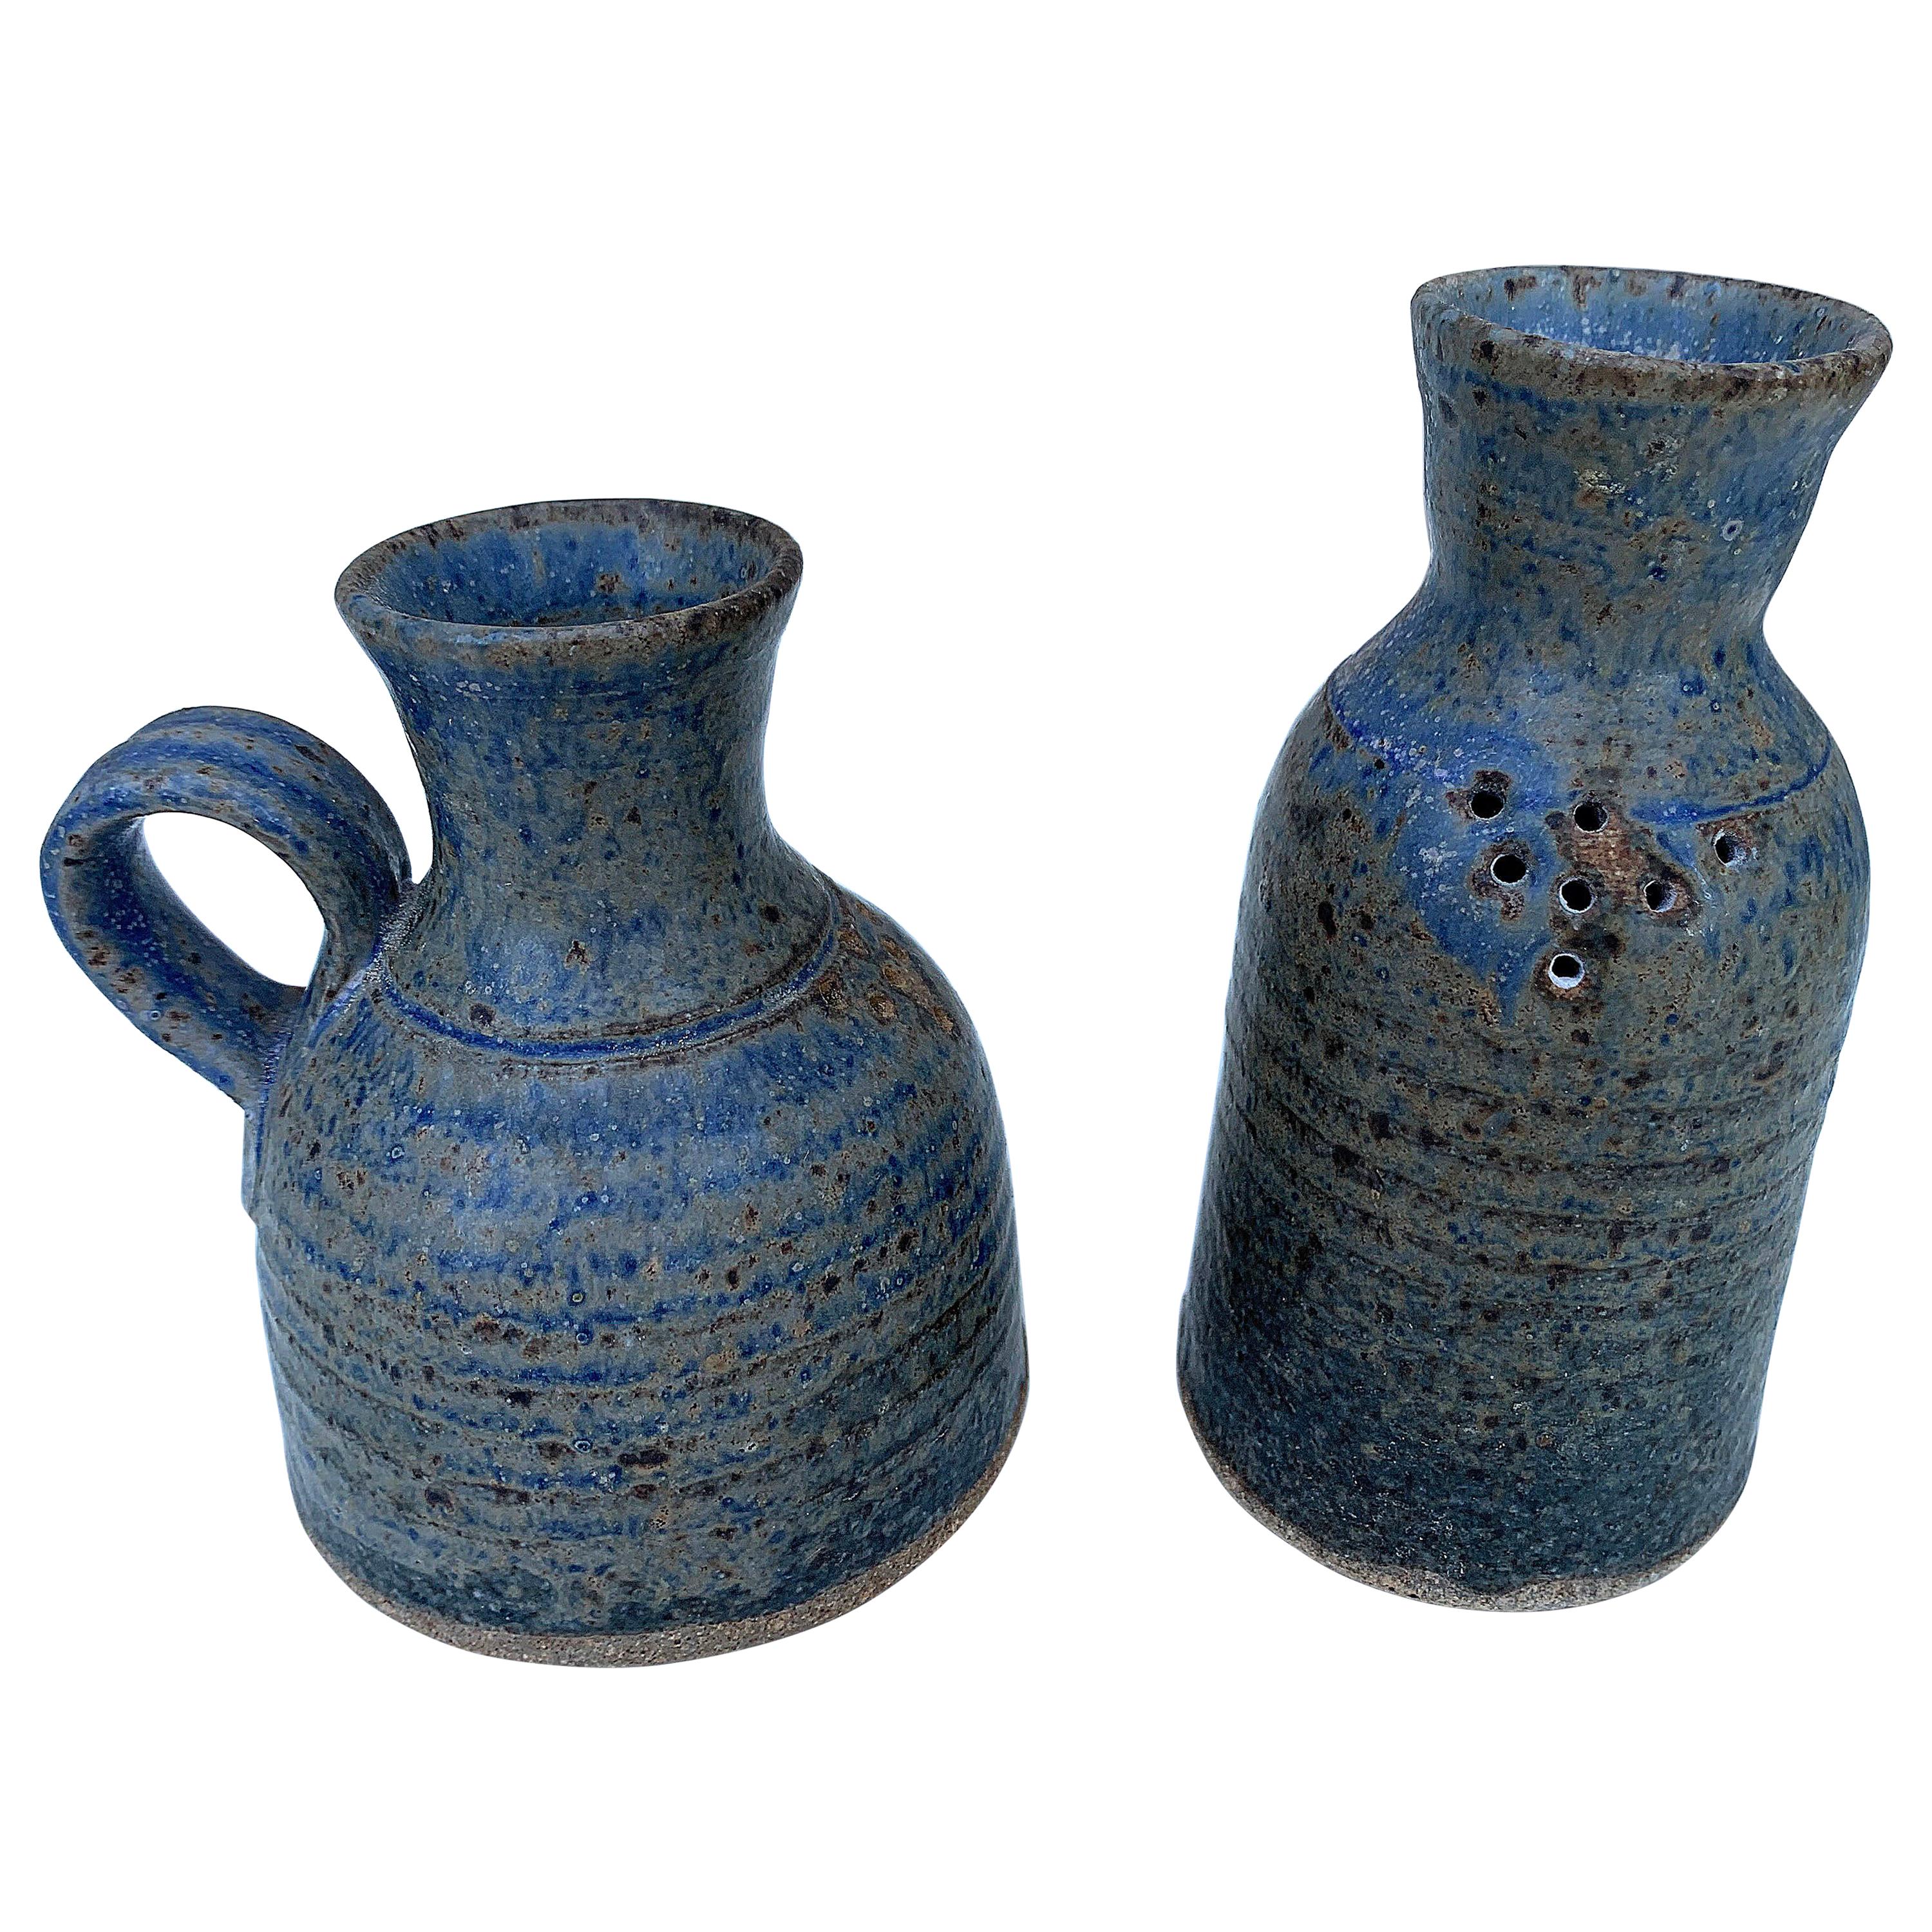 Pair of Small Blue Ceramic Decanters